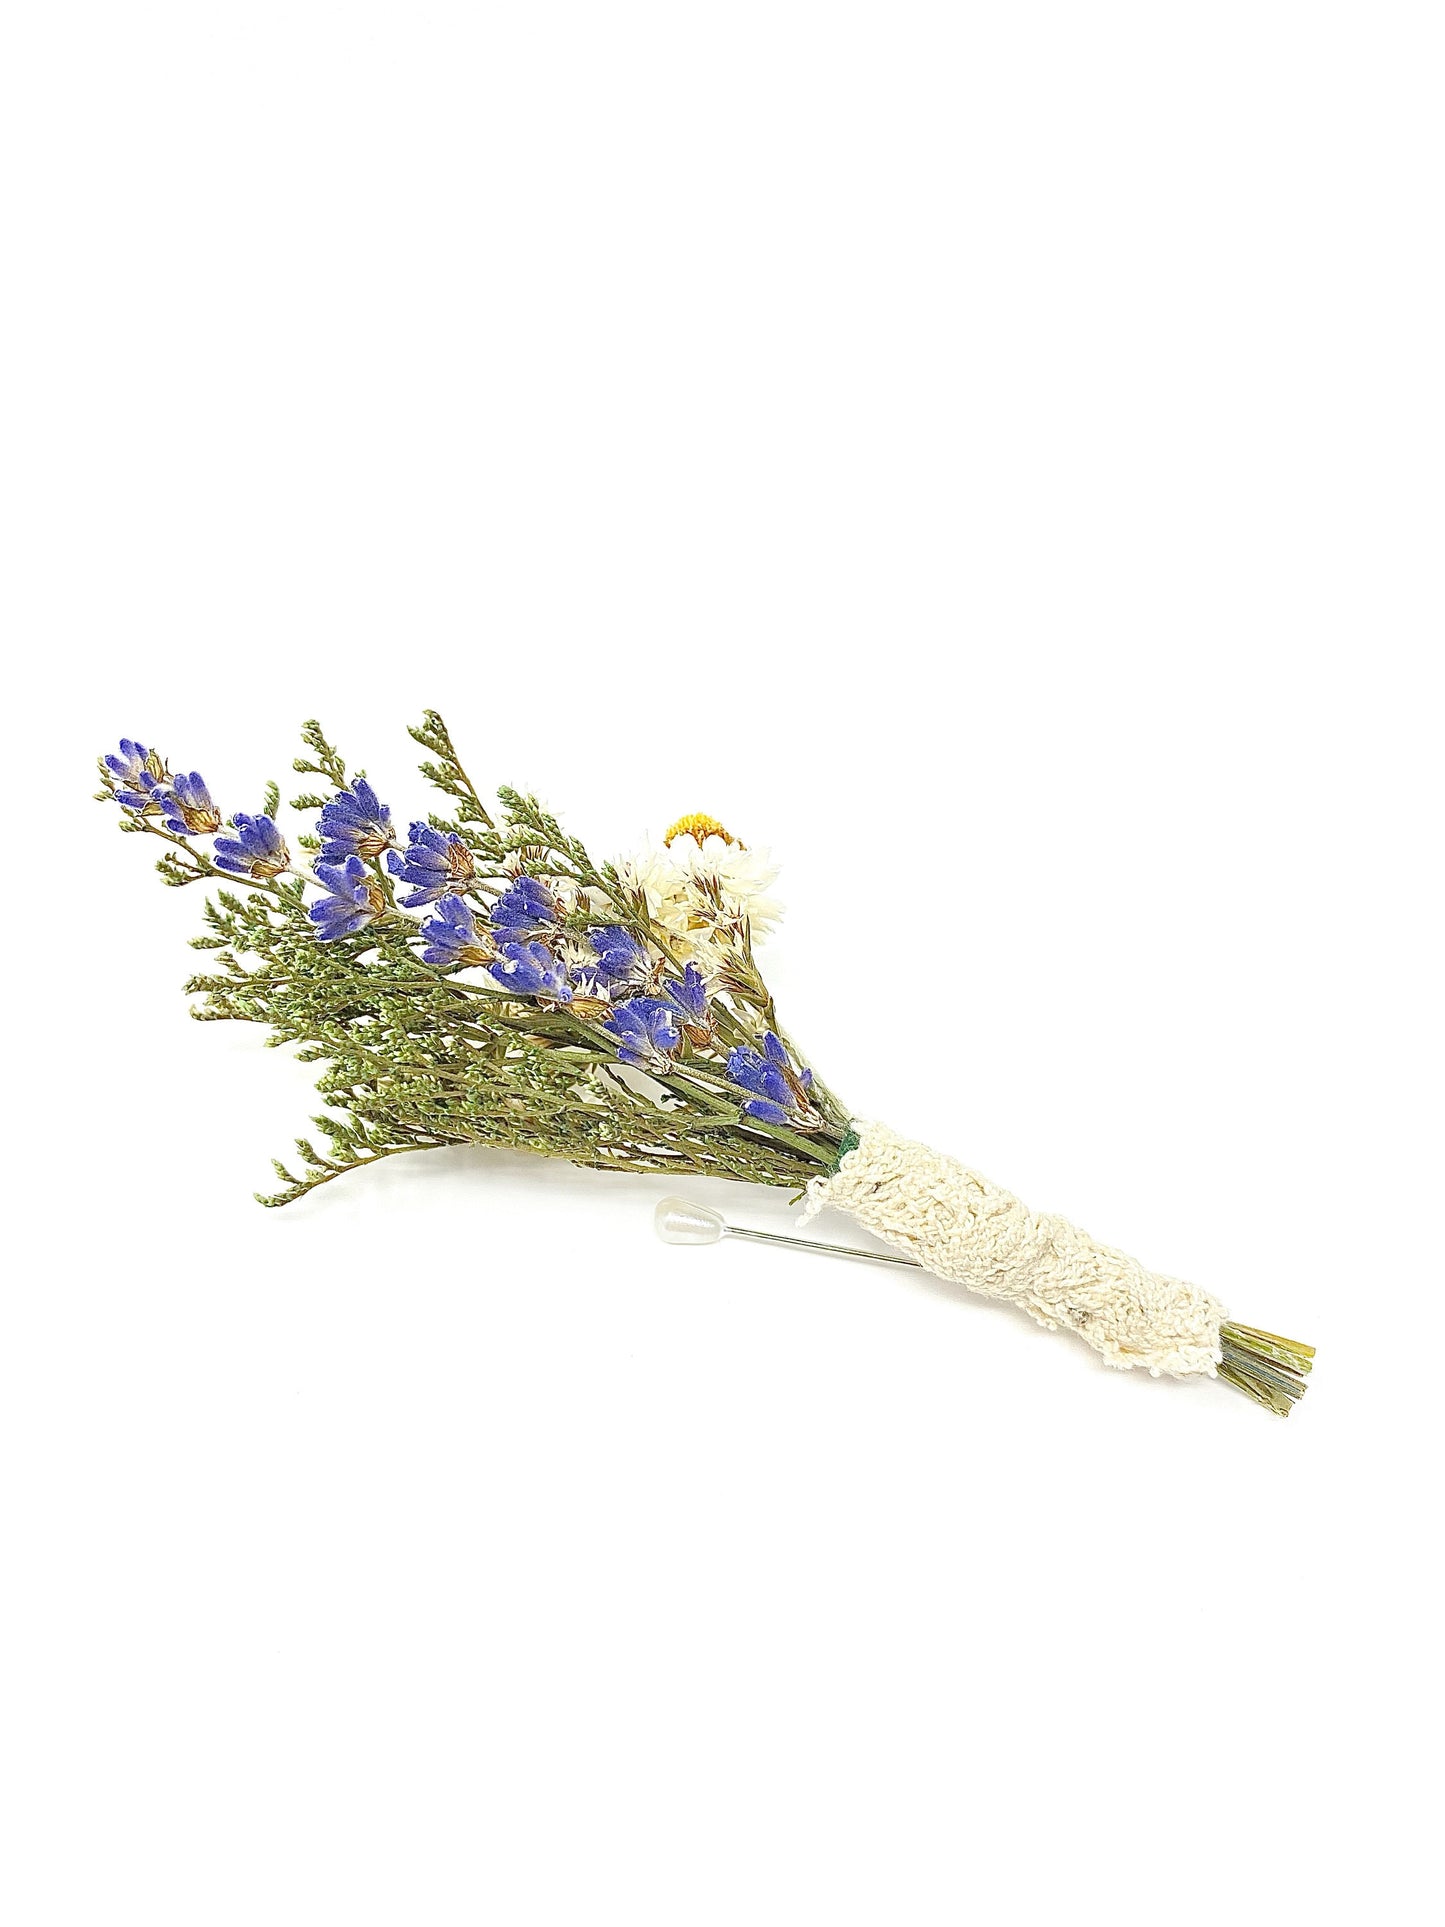 Boutonniere, Dried Flowers, Wedding Accessories, Preserved Floral, Bridal, Lavender, Decor, Ammobium, German Statice